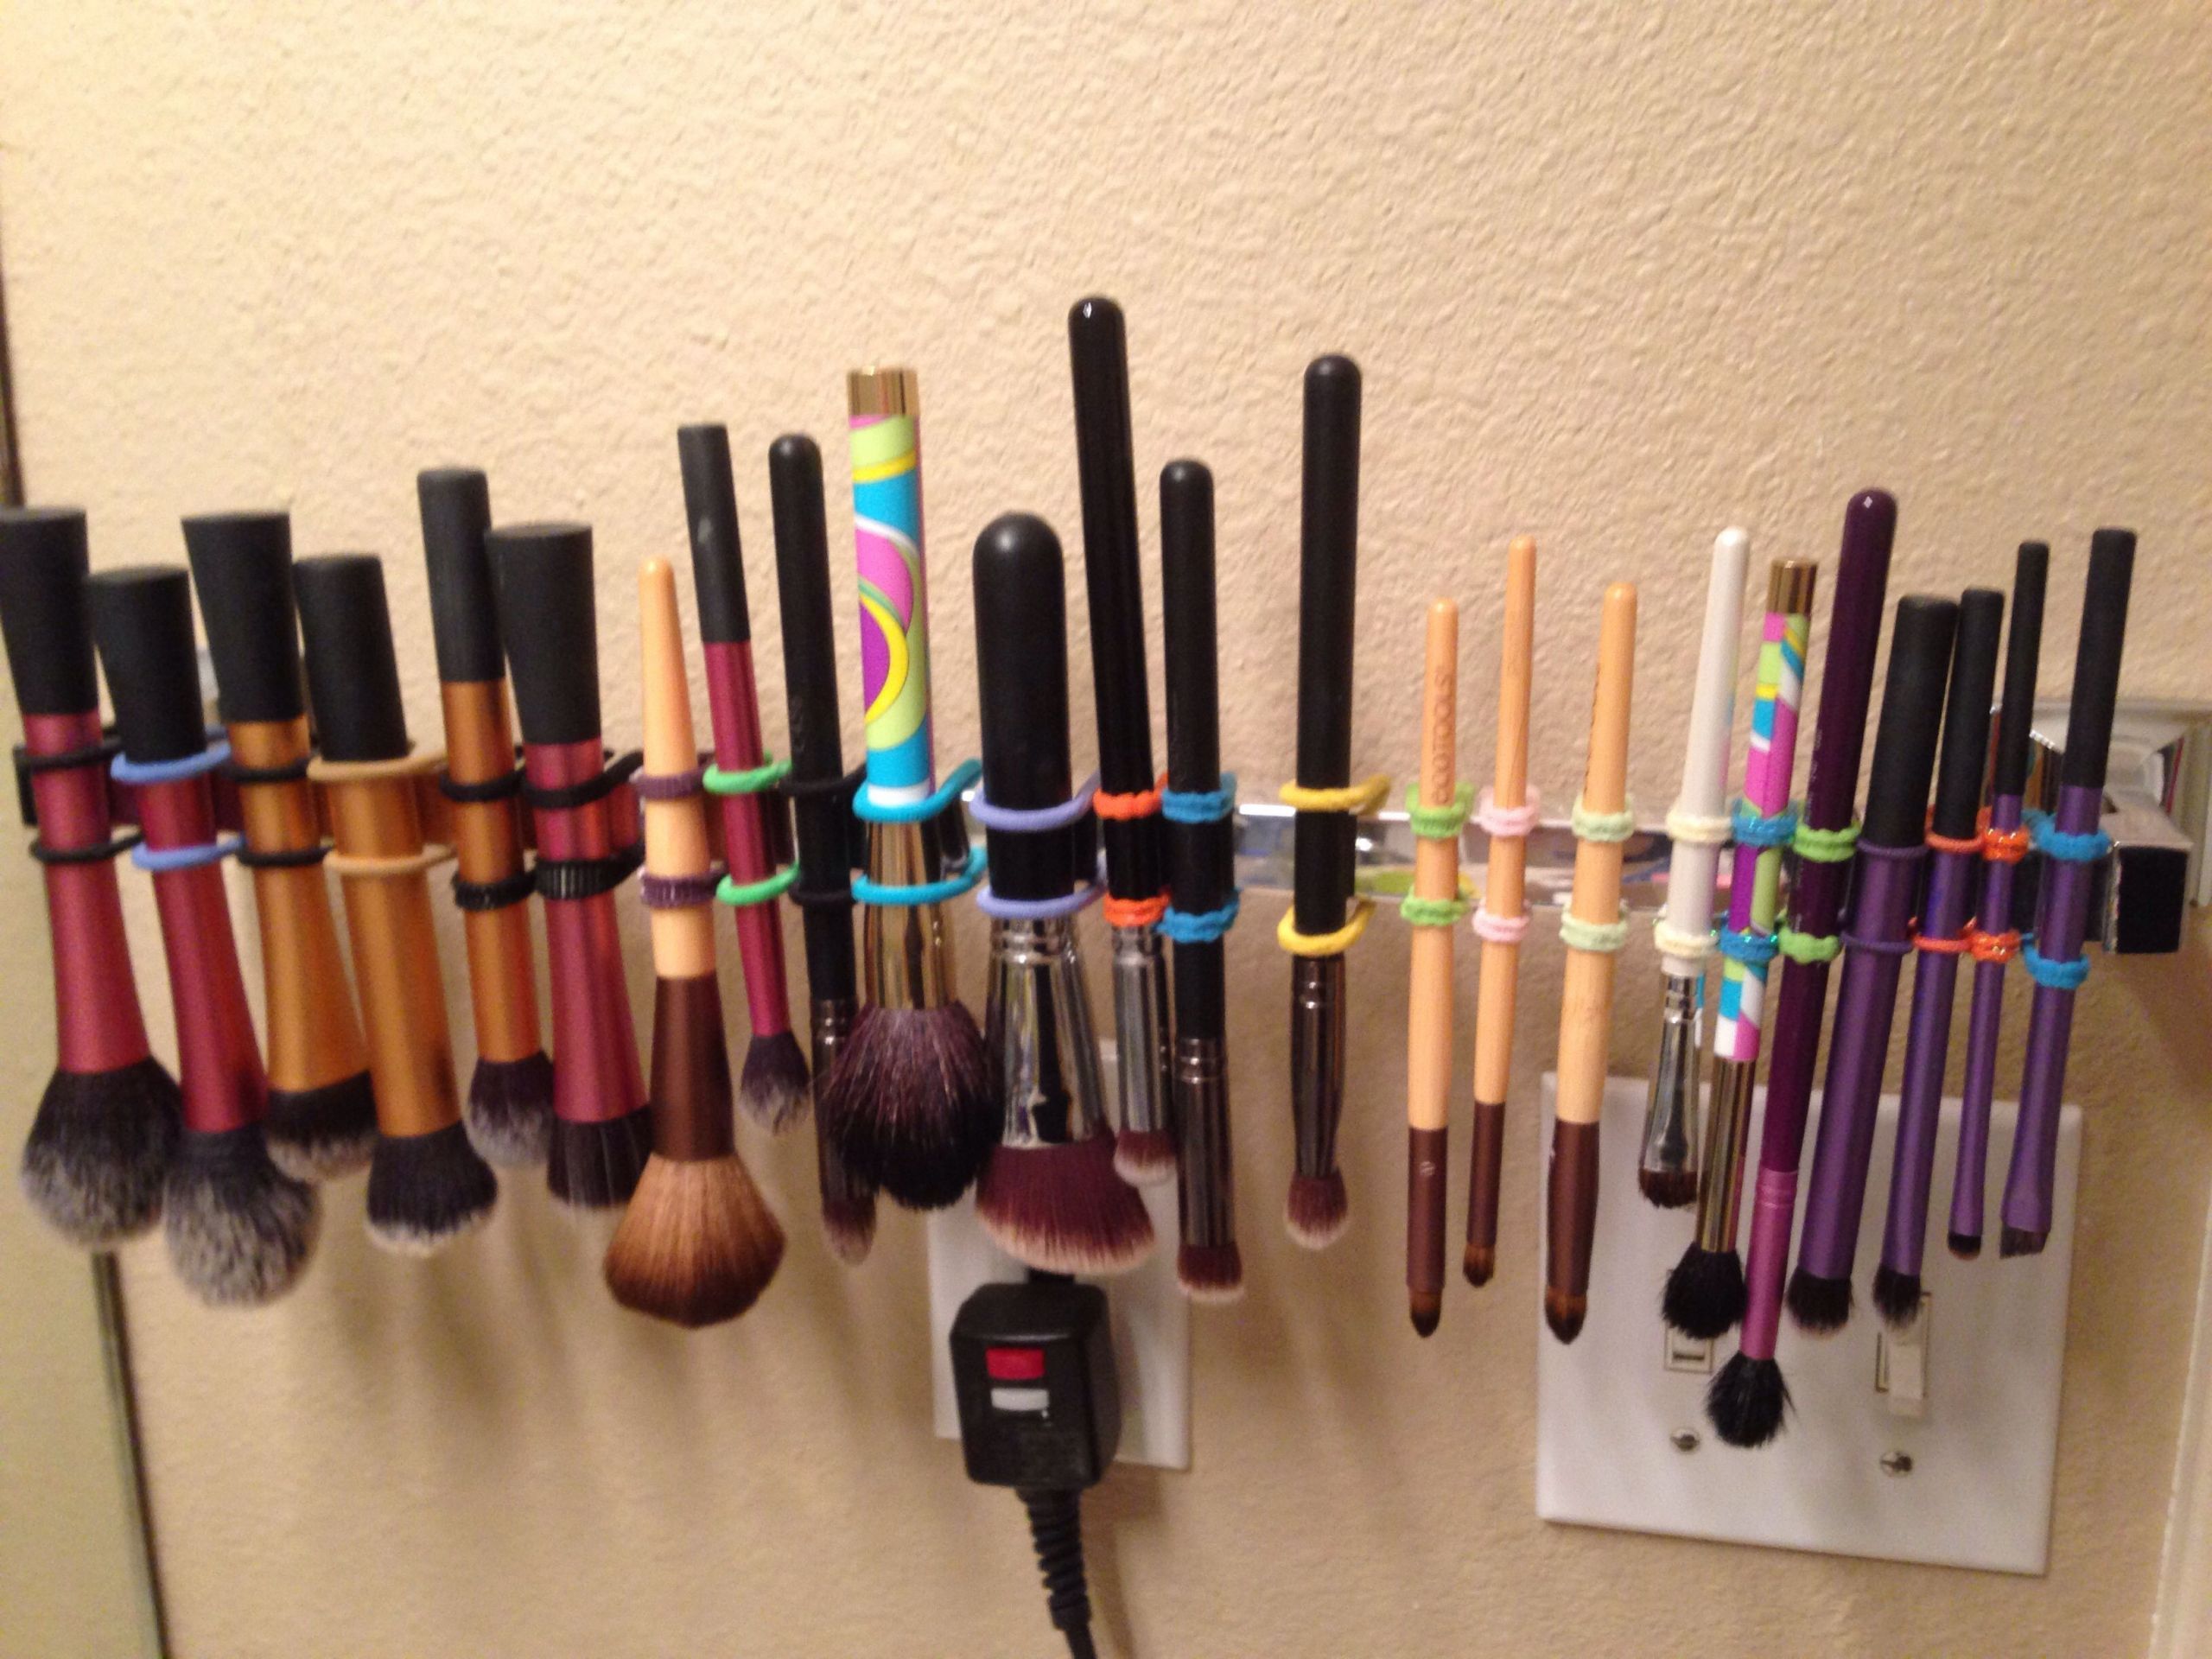 DIY Makeup Brush Drying Rack
 Drying makeup brushes You don t need an expensive drying